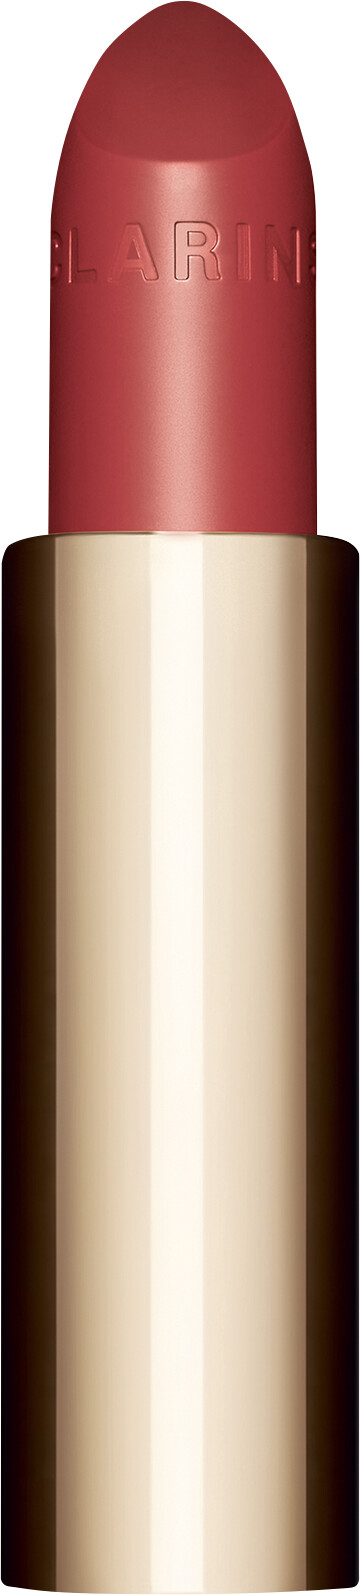 Clarins Joli Rouge Lipstick Refill 3.5g 752 - Rosewood